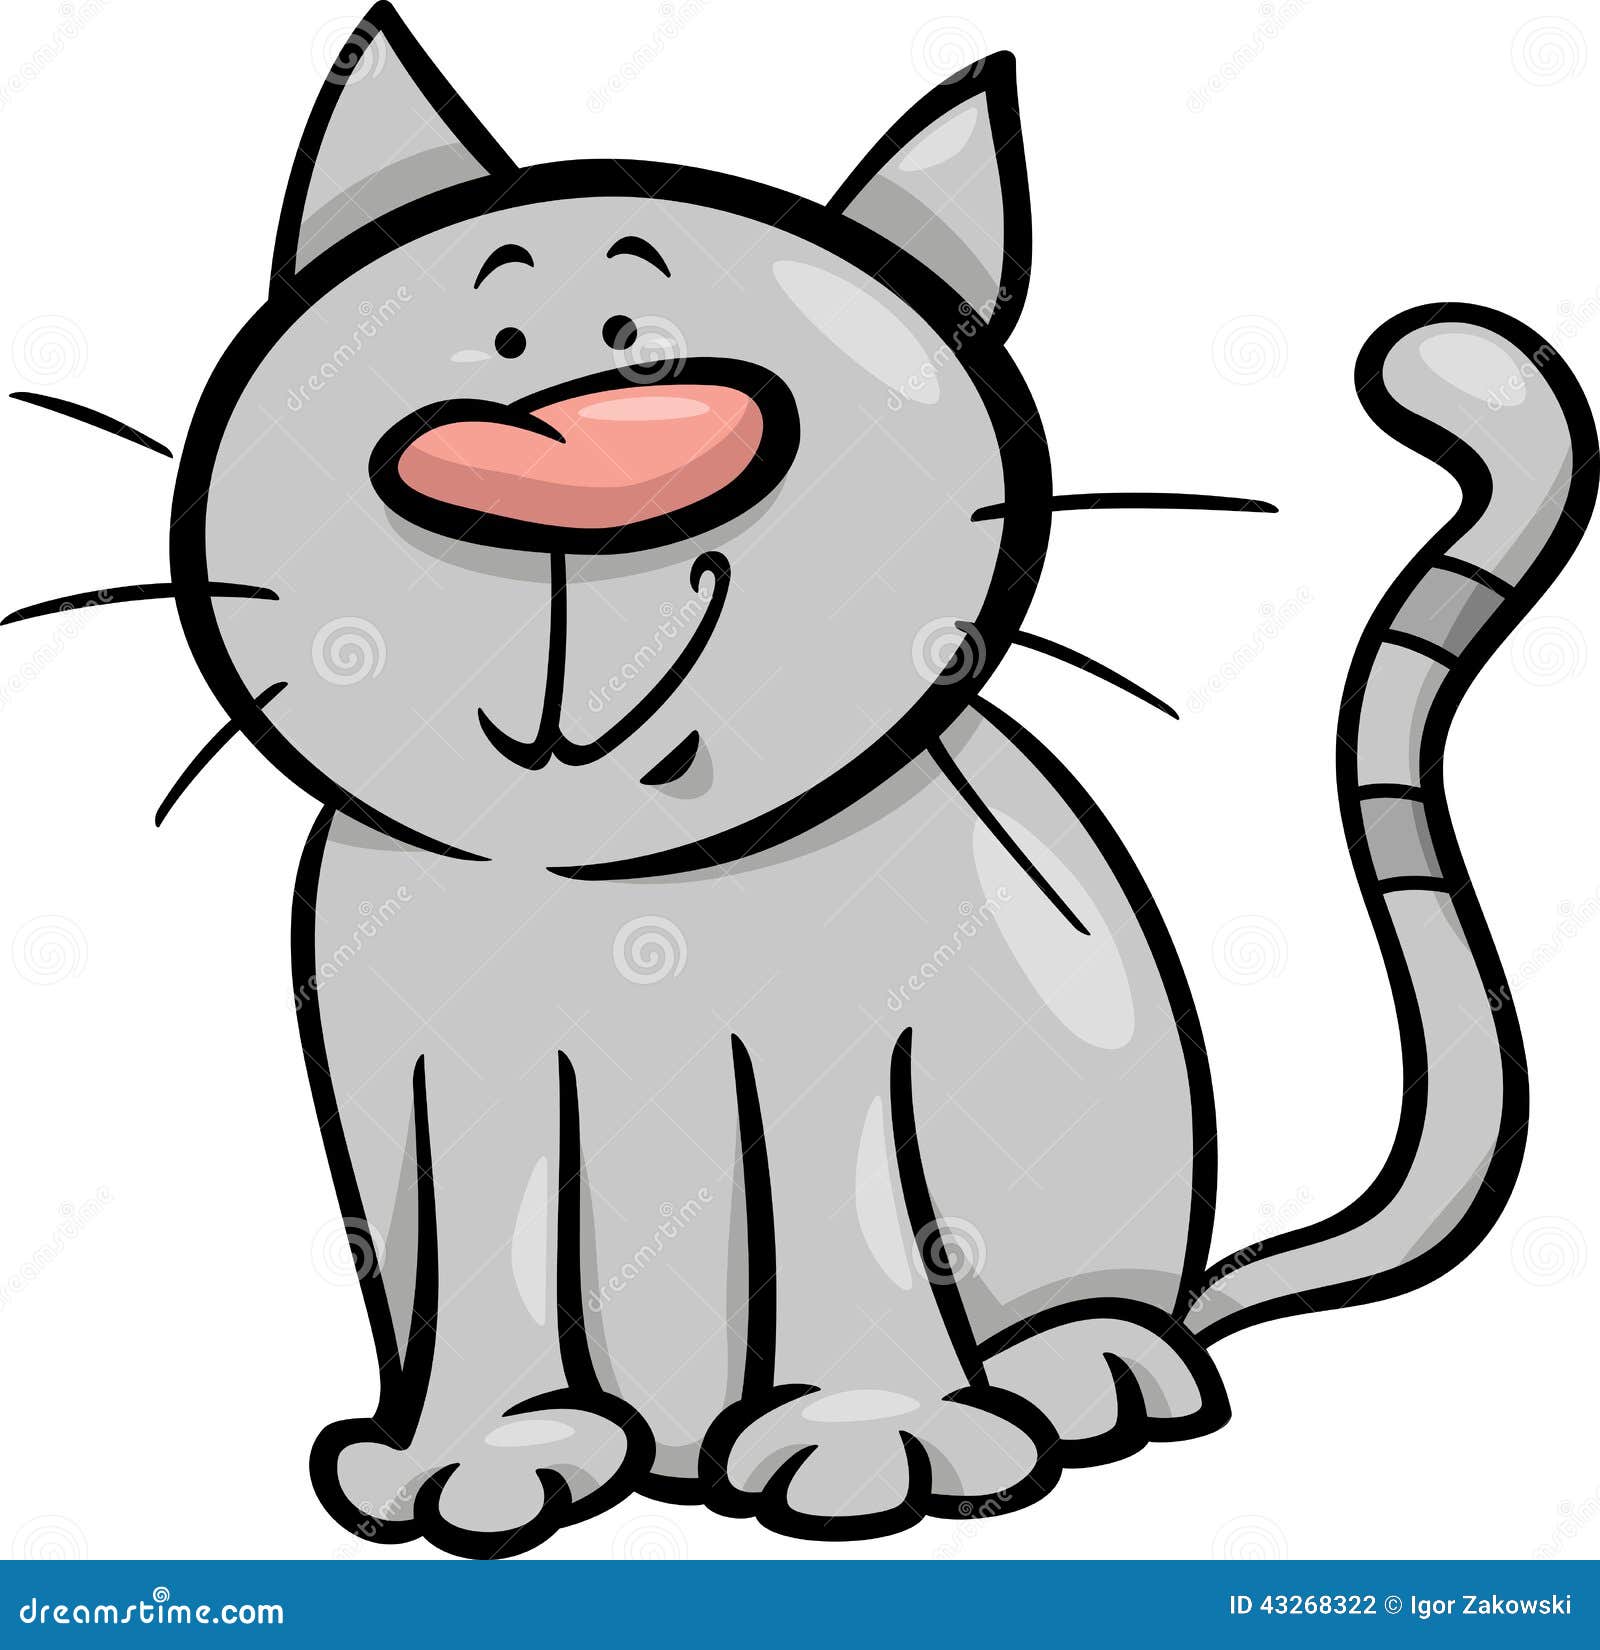 Funny Cat Cartoon Illustration Stock Vector - Image: 43268322